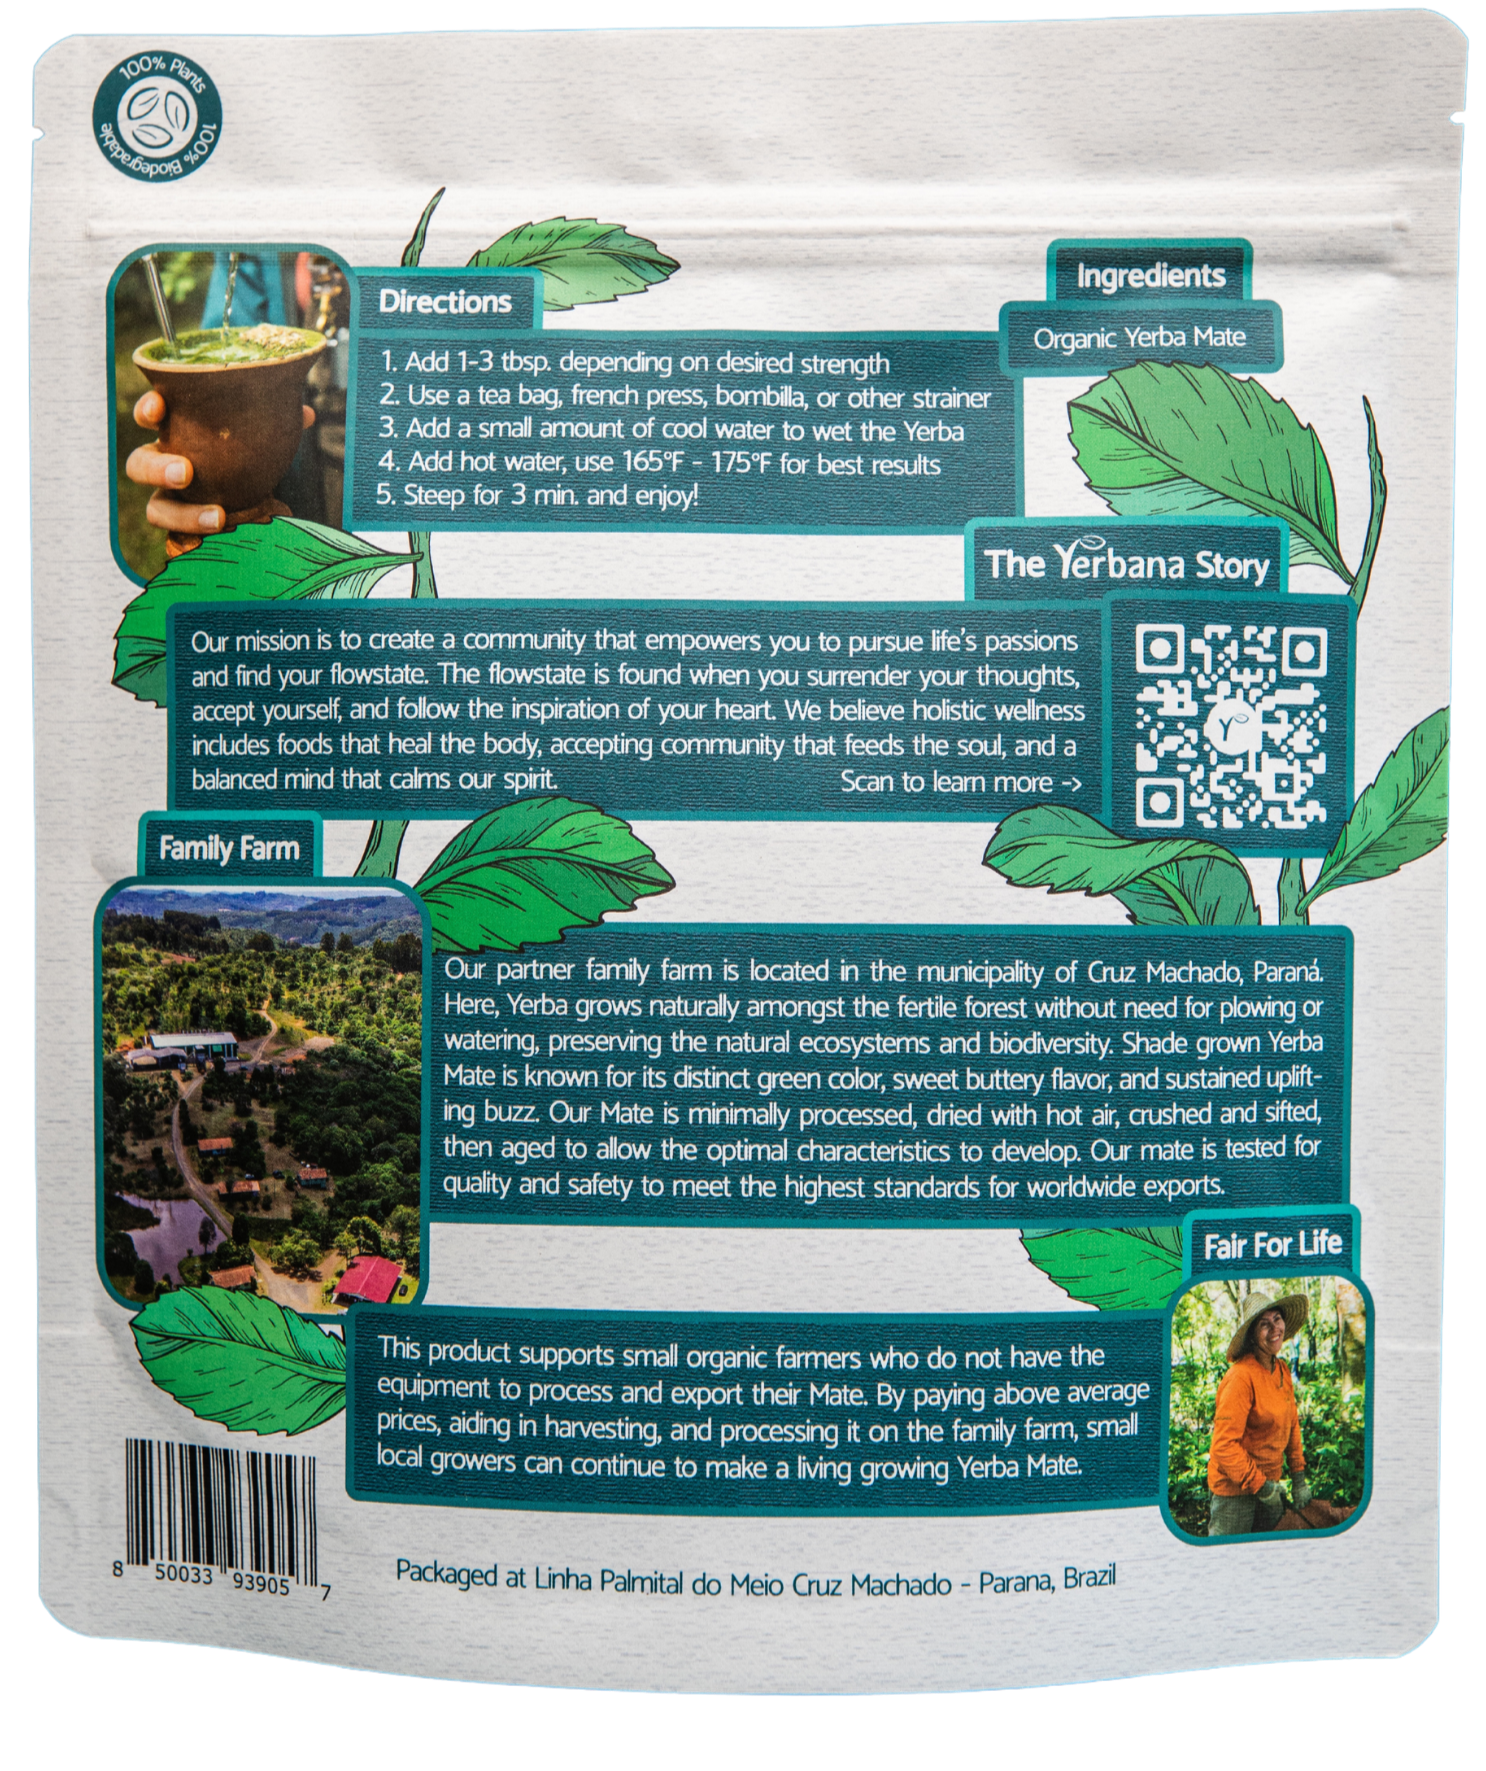 Steeping directions, ingredients, Yerbana story, family farm, fair for life, organic yerba mate loose leaf 